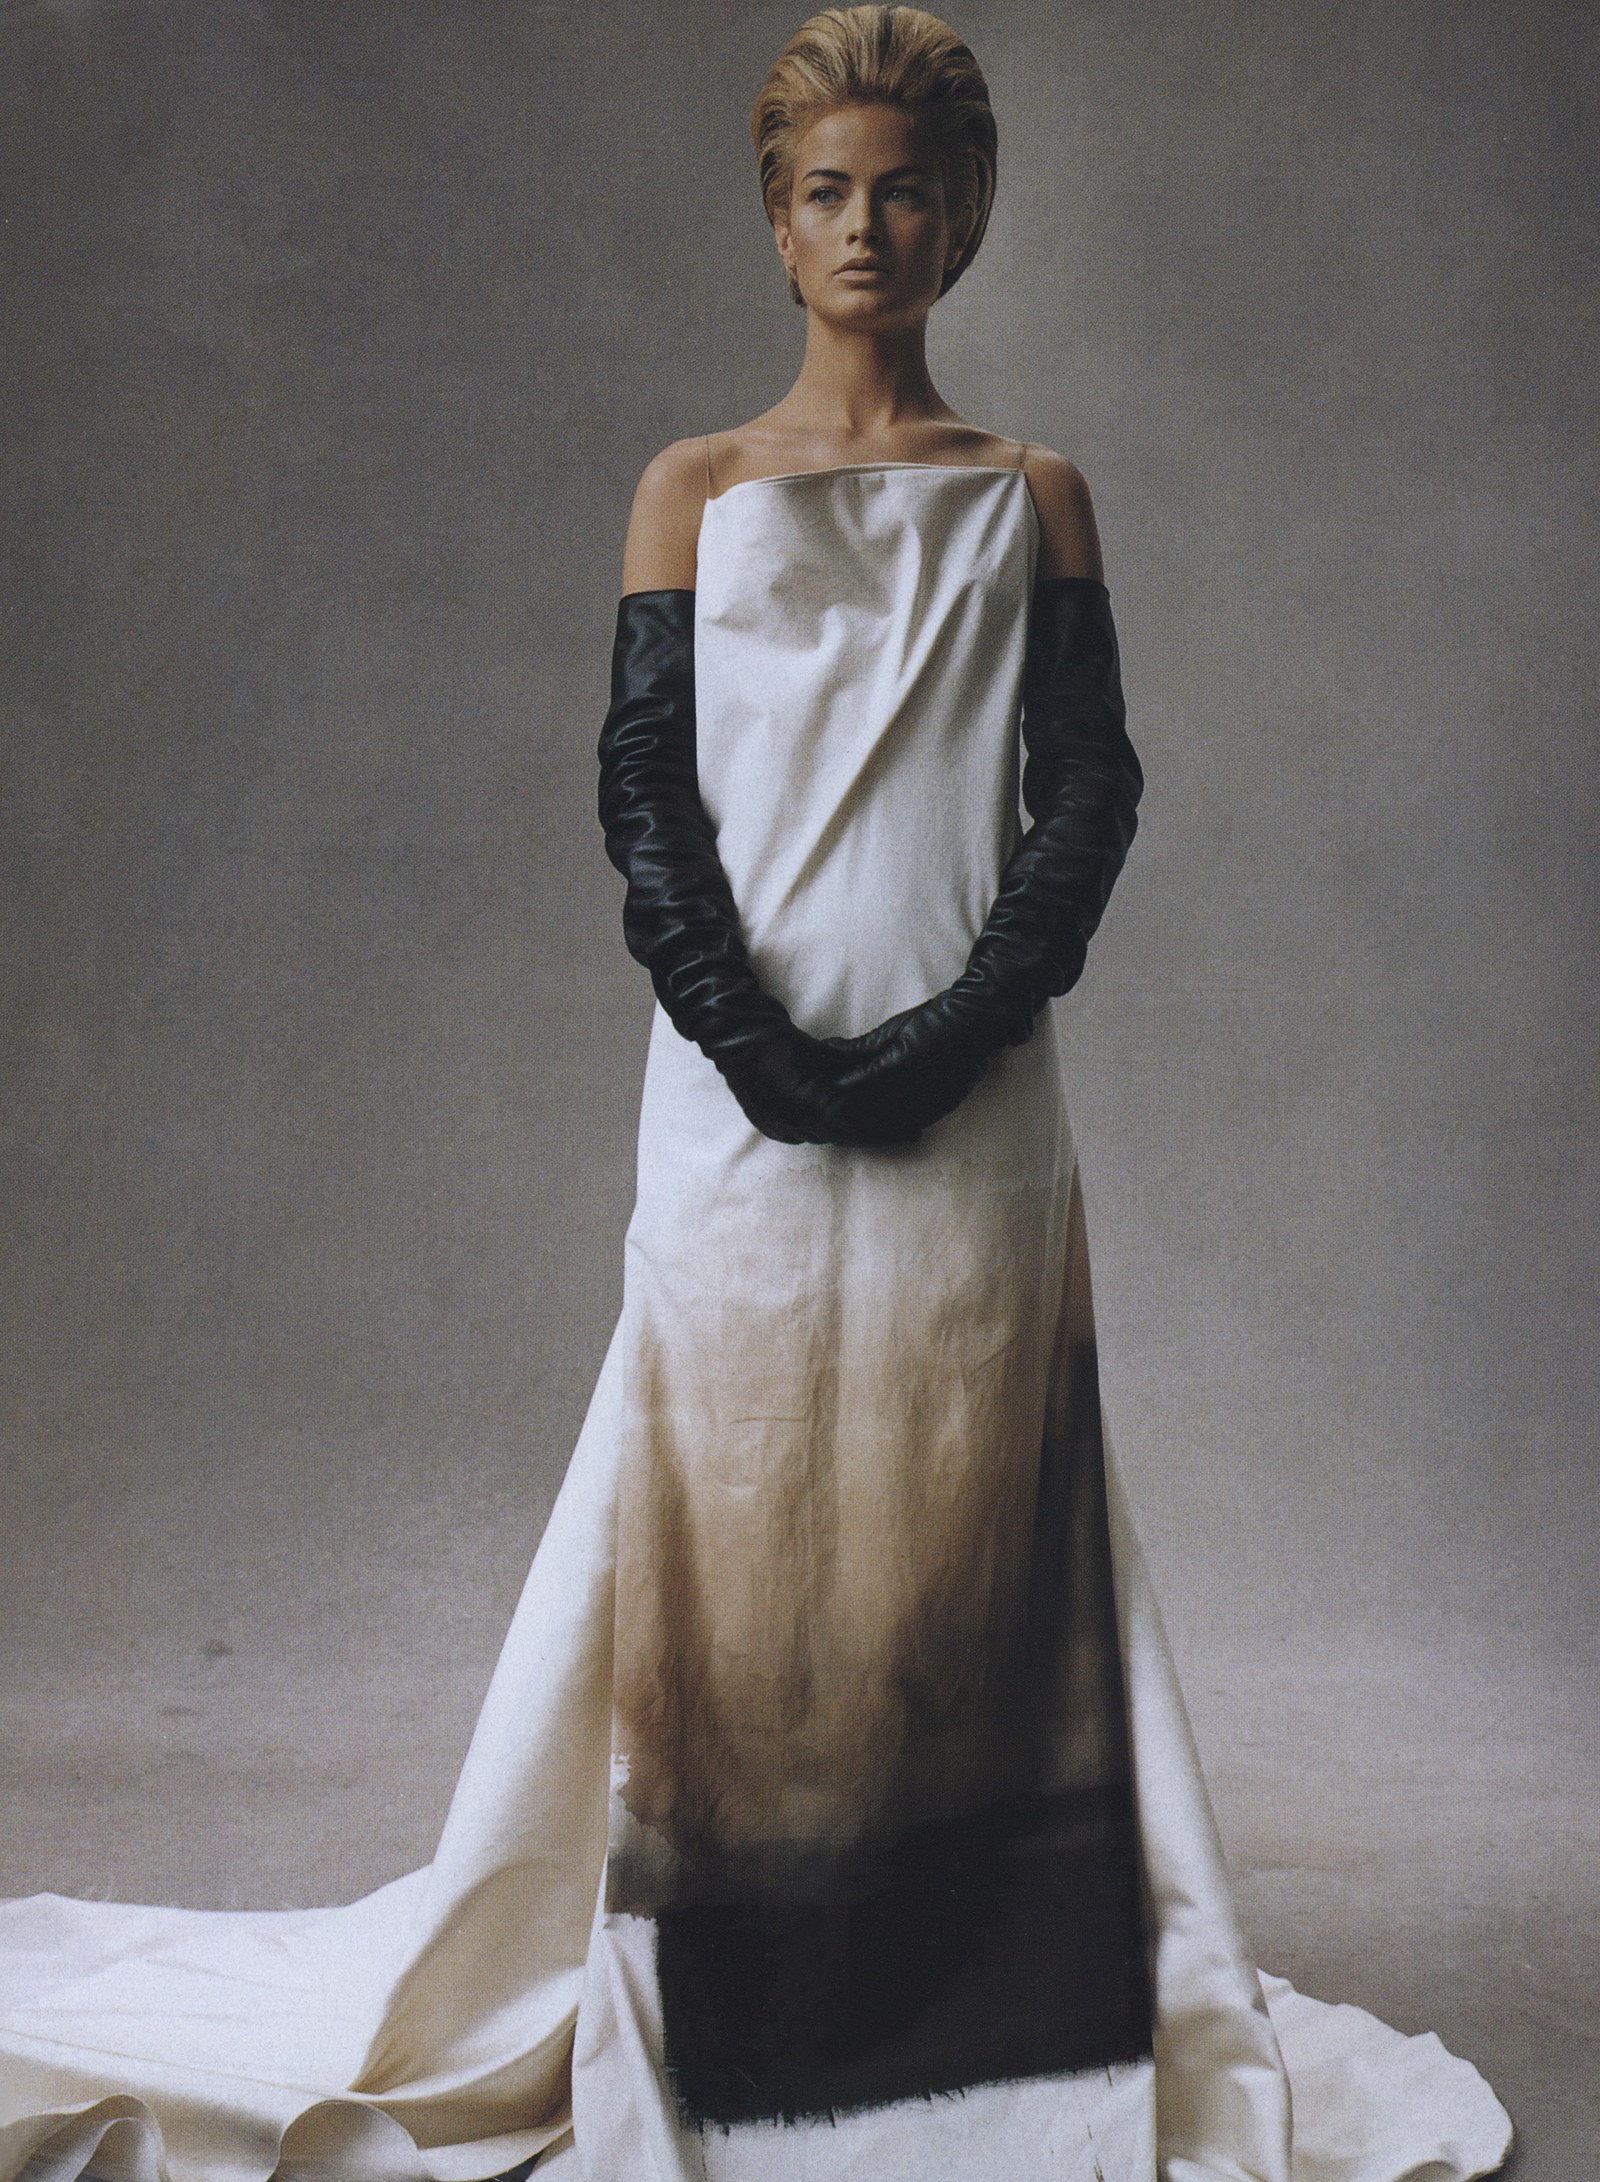 Photographed by Steven Meisel, Vogue, October 1998